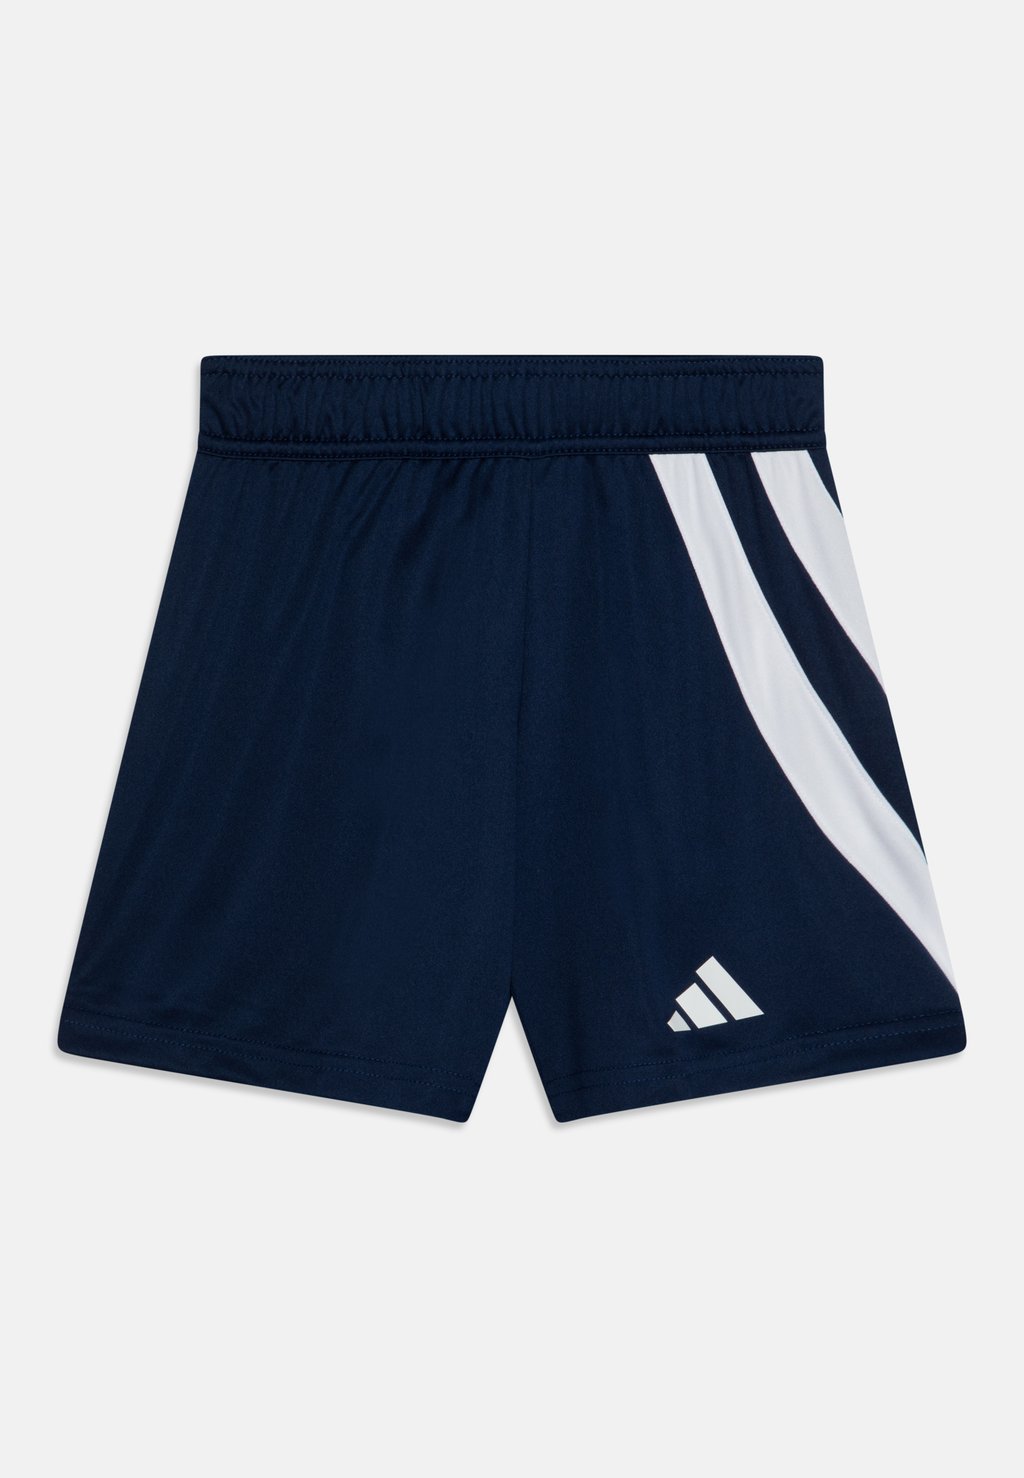 Спортивные шорты FORTORE UNISEX adidas Performance, цвет team navy blue 2/white цена и фото